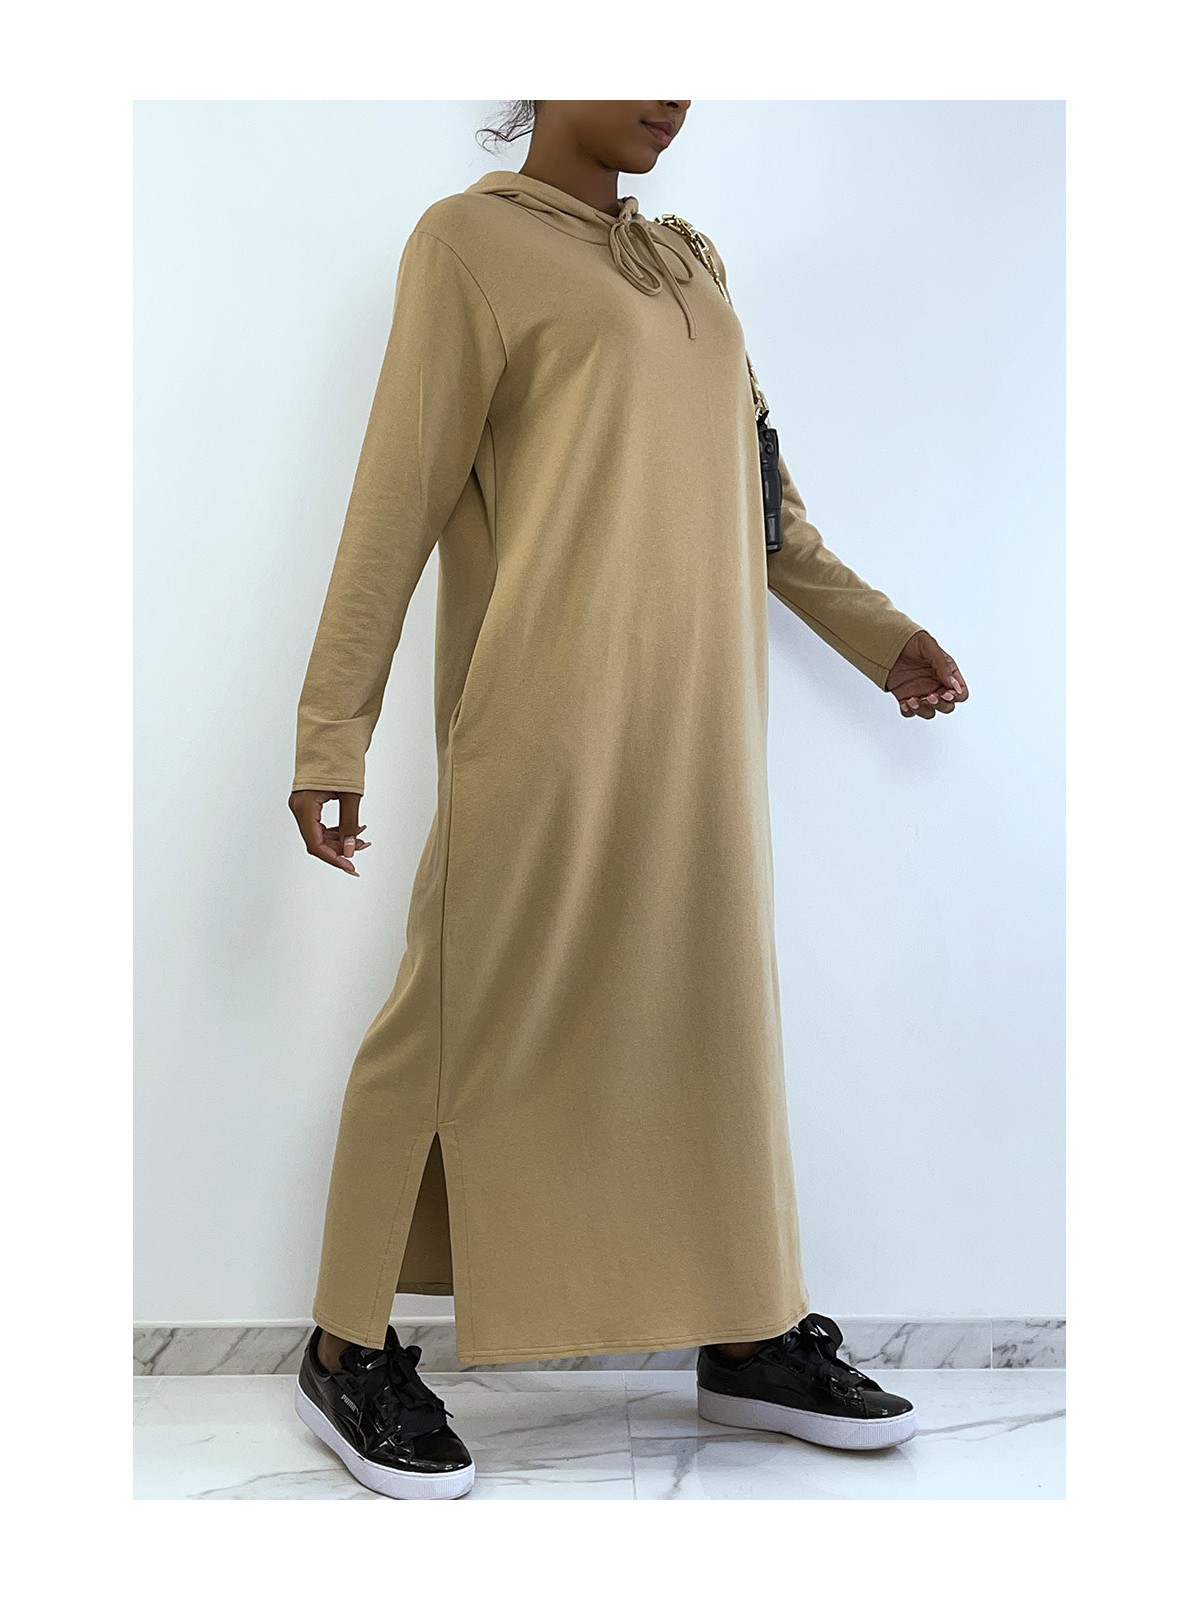 Longue robe sweat abaya camel à capuche - 4